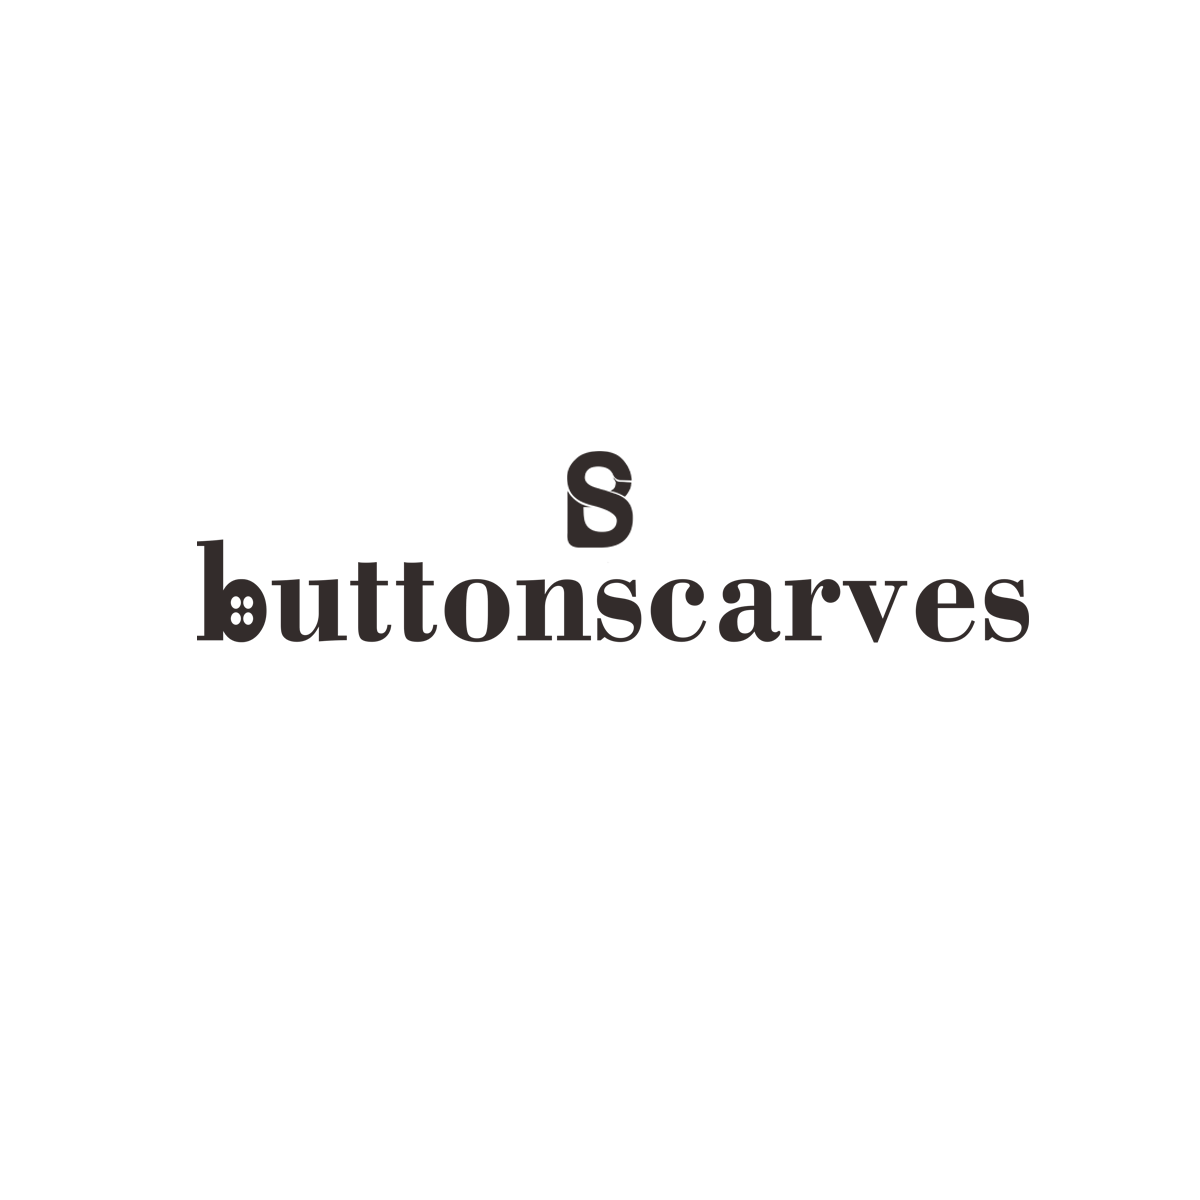 Buttonscraves logo